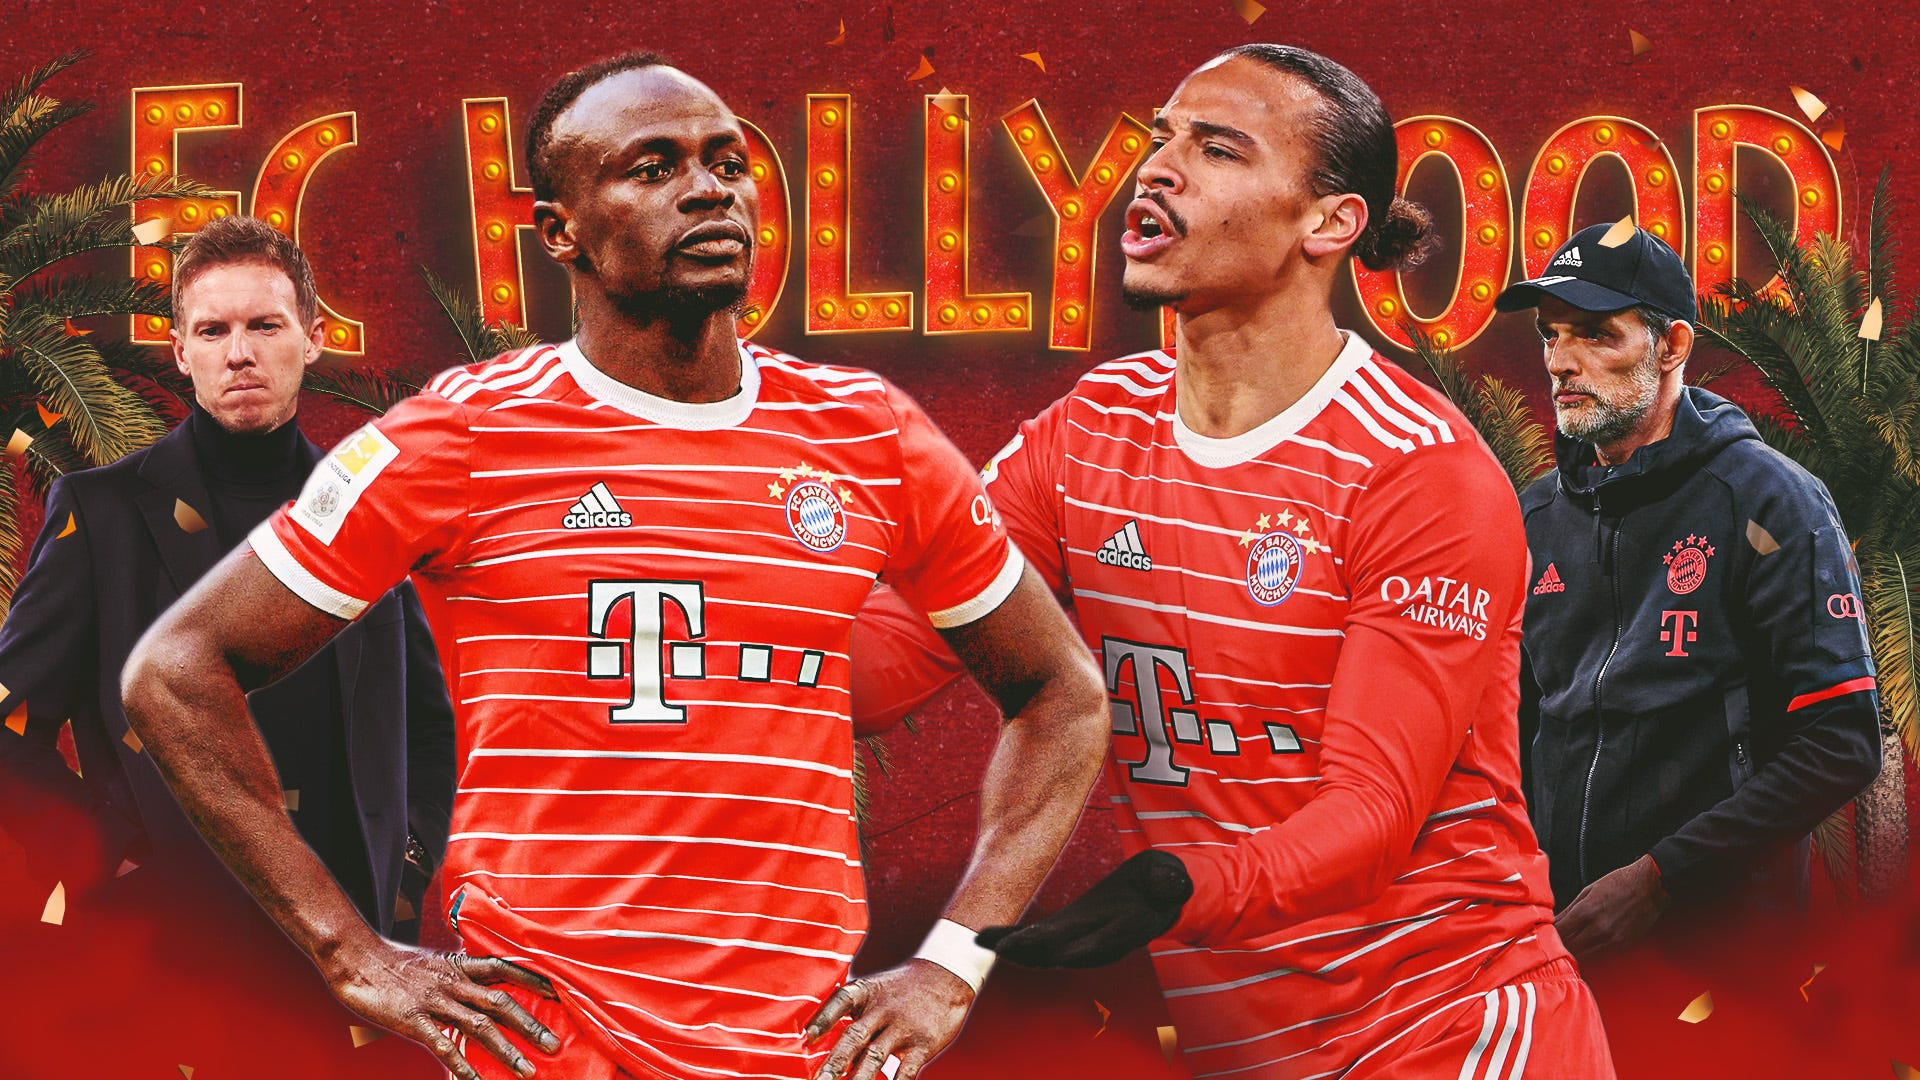 FIFA 22 best teams guide sees Bayern Munich claim top spot